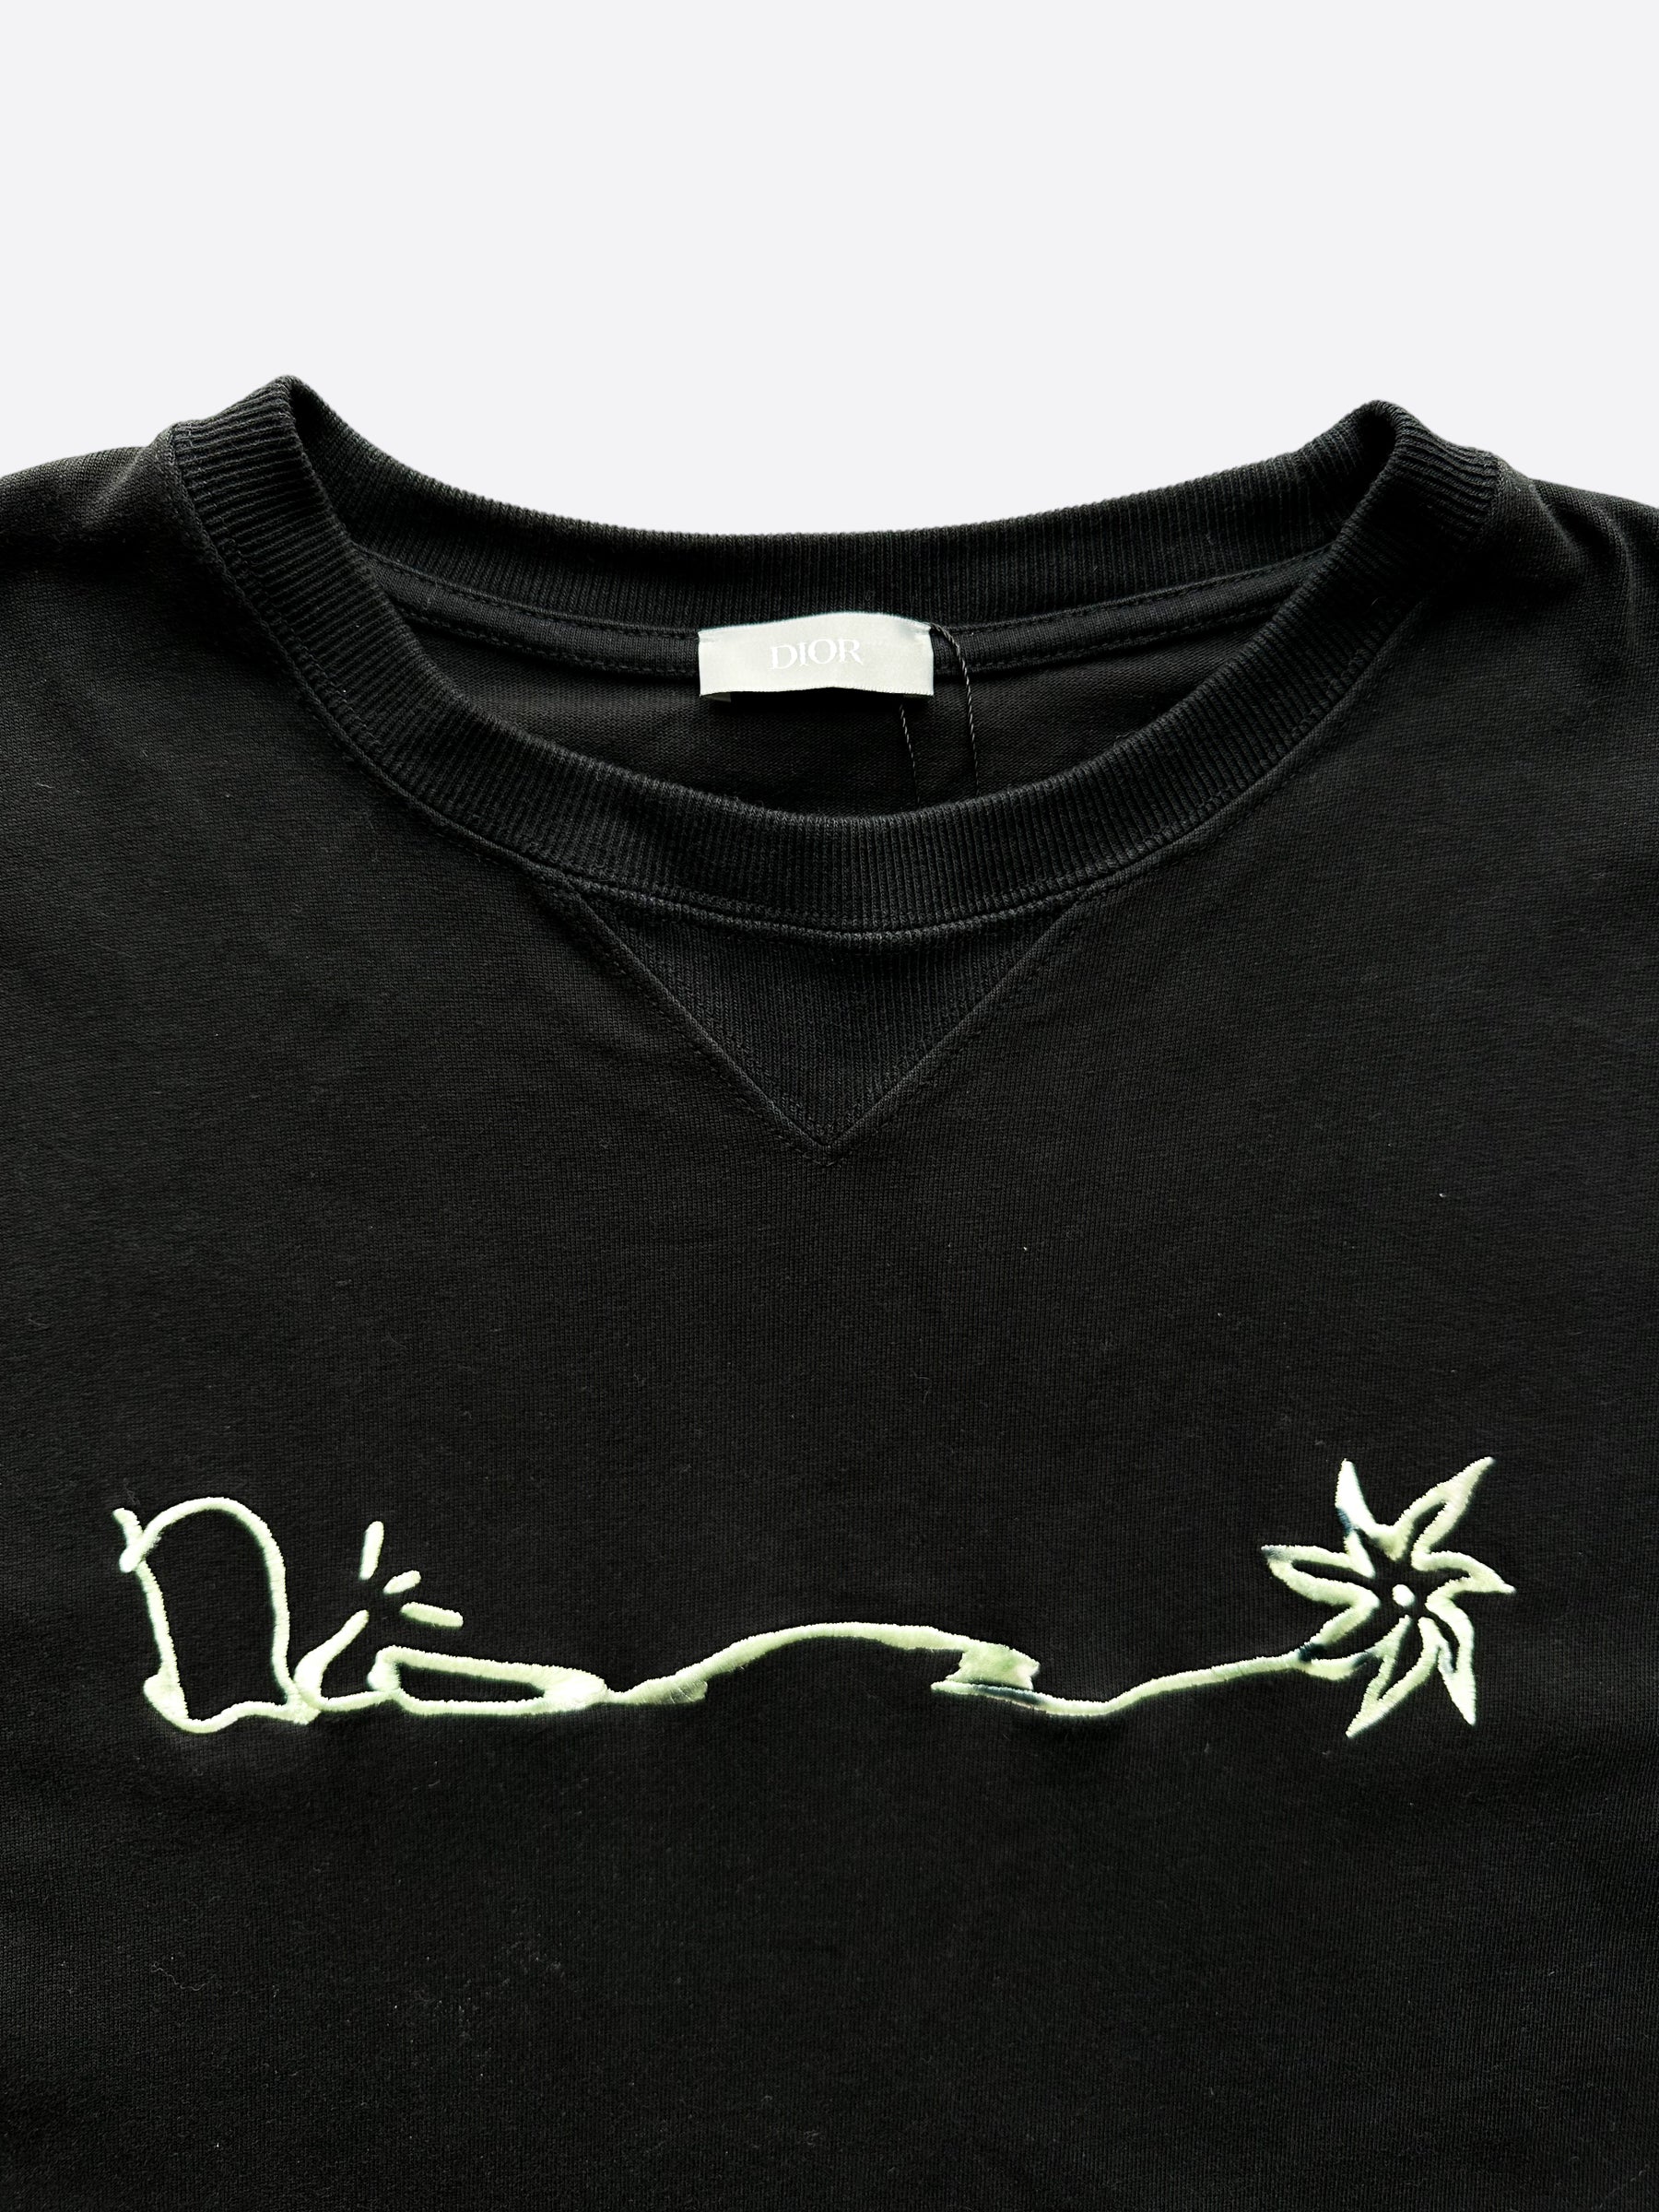 Dior Cactus Jack Black Embroidered Logo T-Shirt